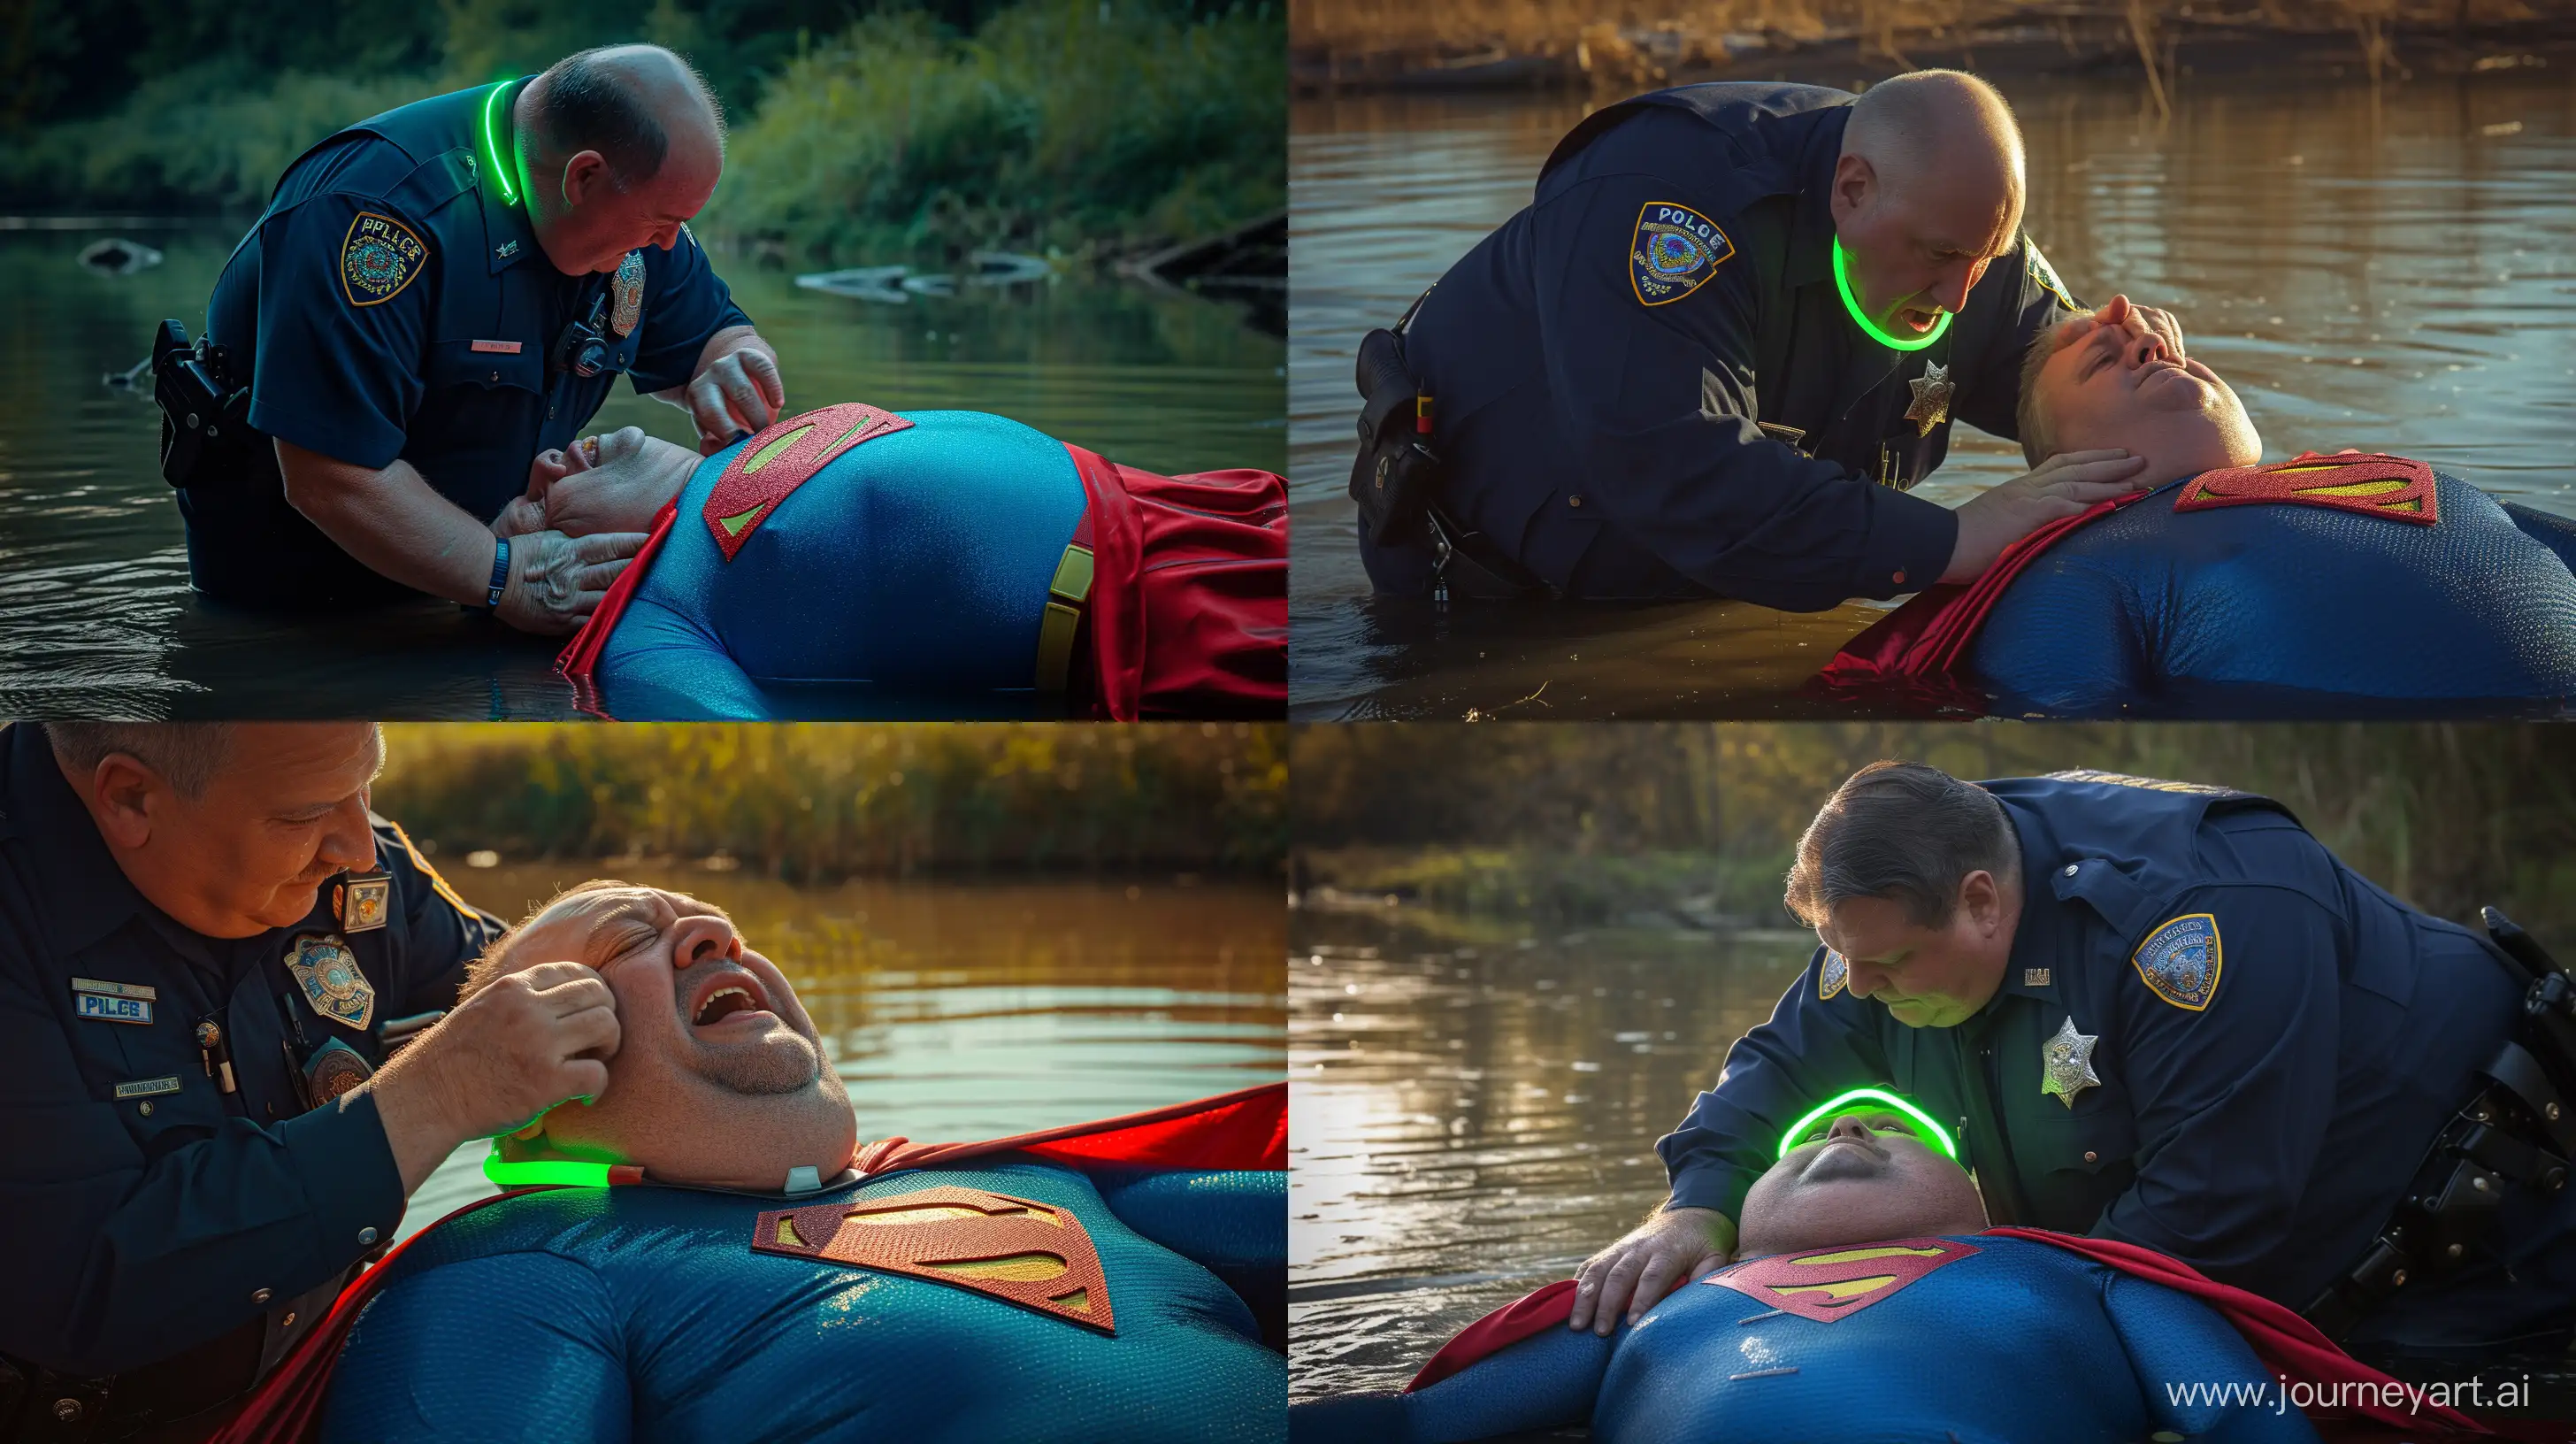 Elderly-Superhero-Receives-Glowing-Neon-Dog-Collar-in-River-Photoshoot